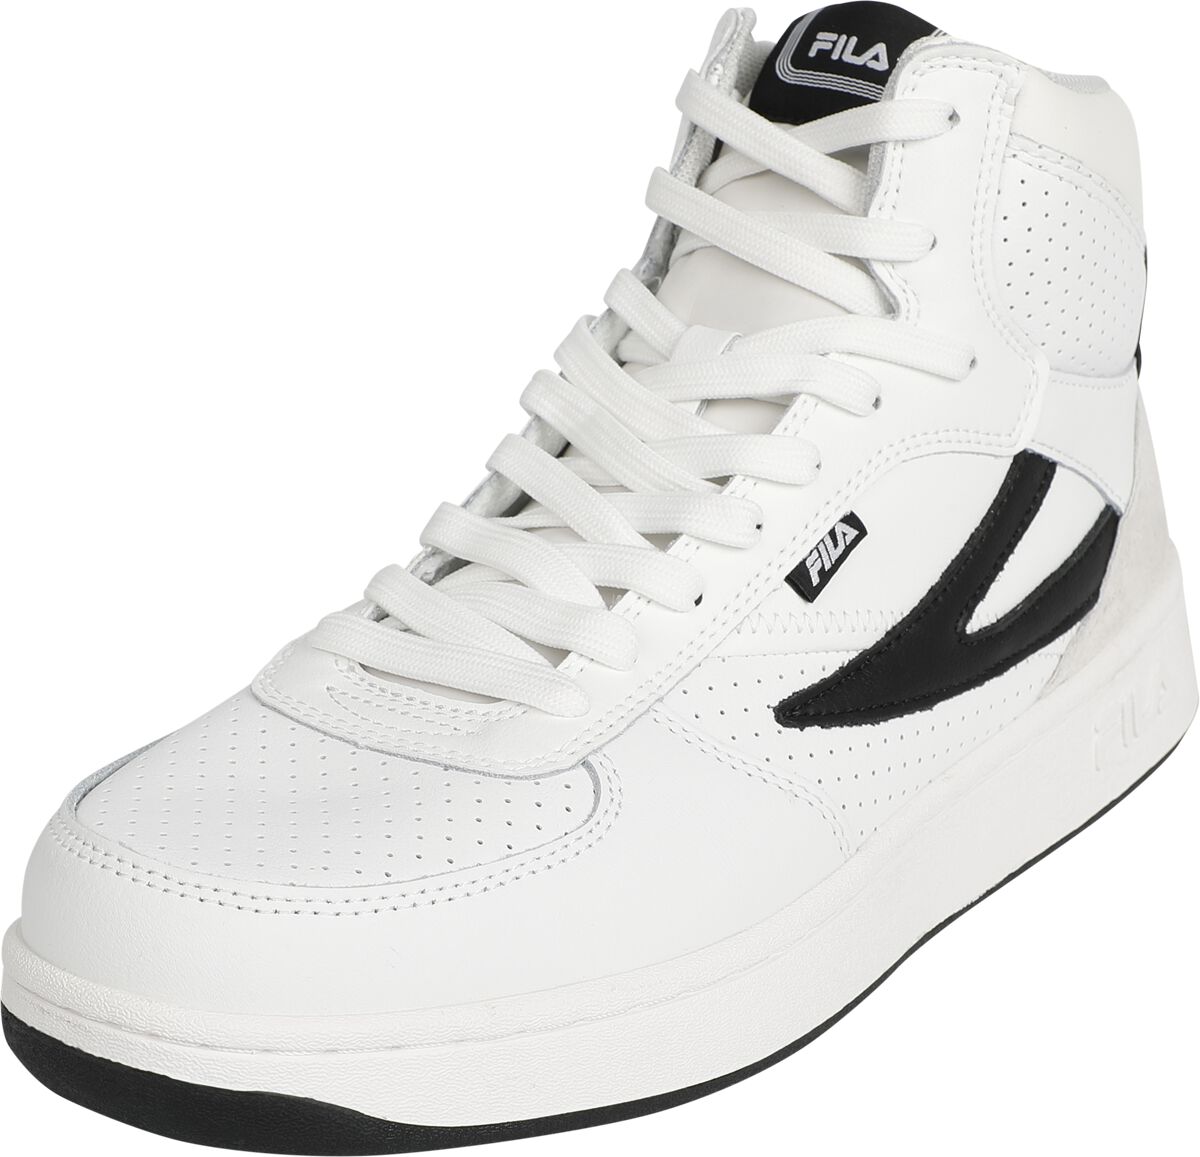 Image of Sneakers alte di Fila - FILA SEVARO mid - EU41 a EU45 - Uomo - bianco/nero